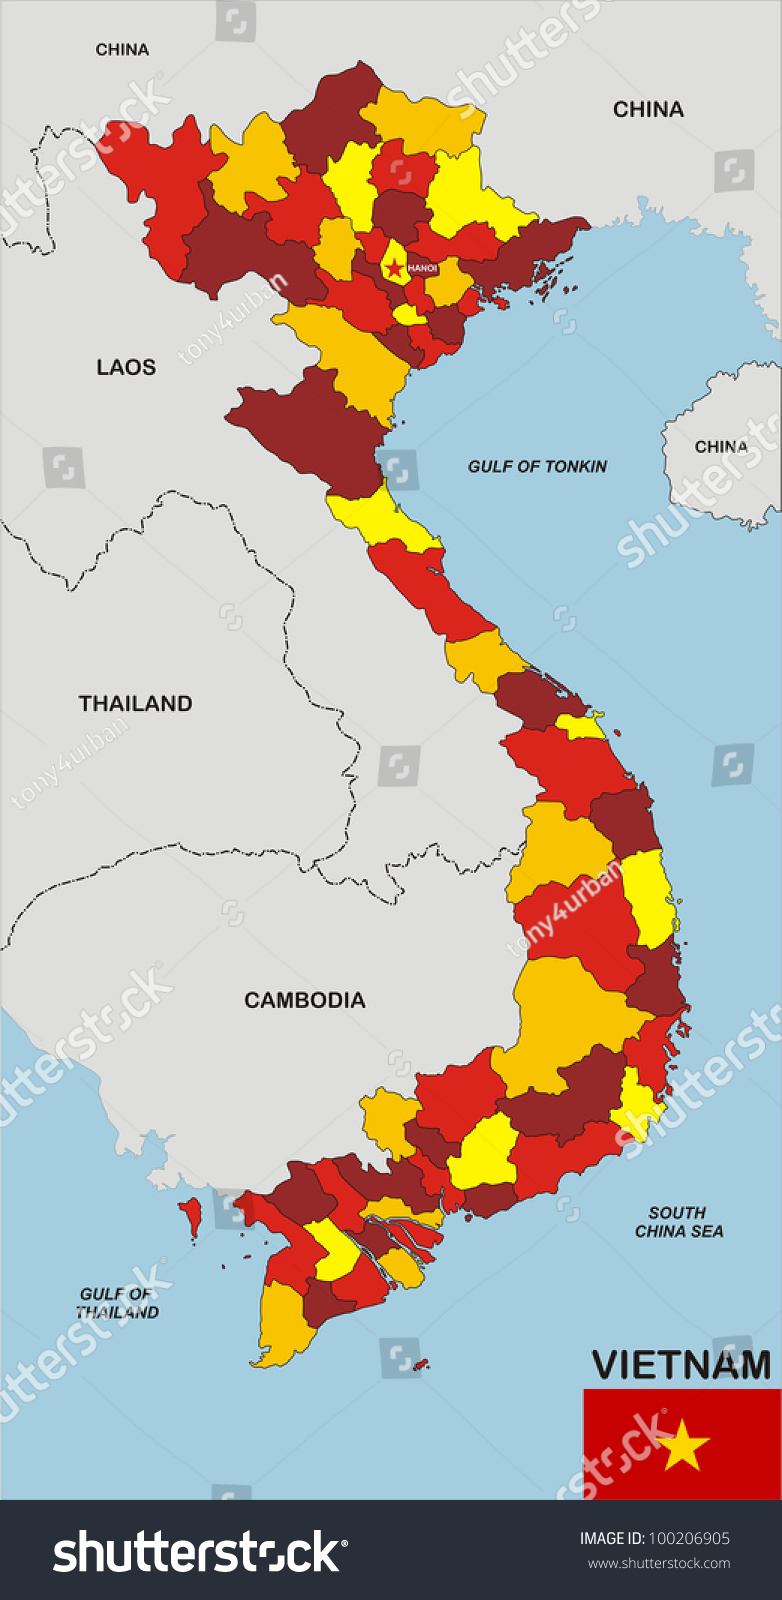 clipart map of vietnam - photo #13